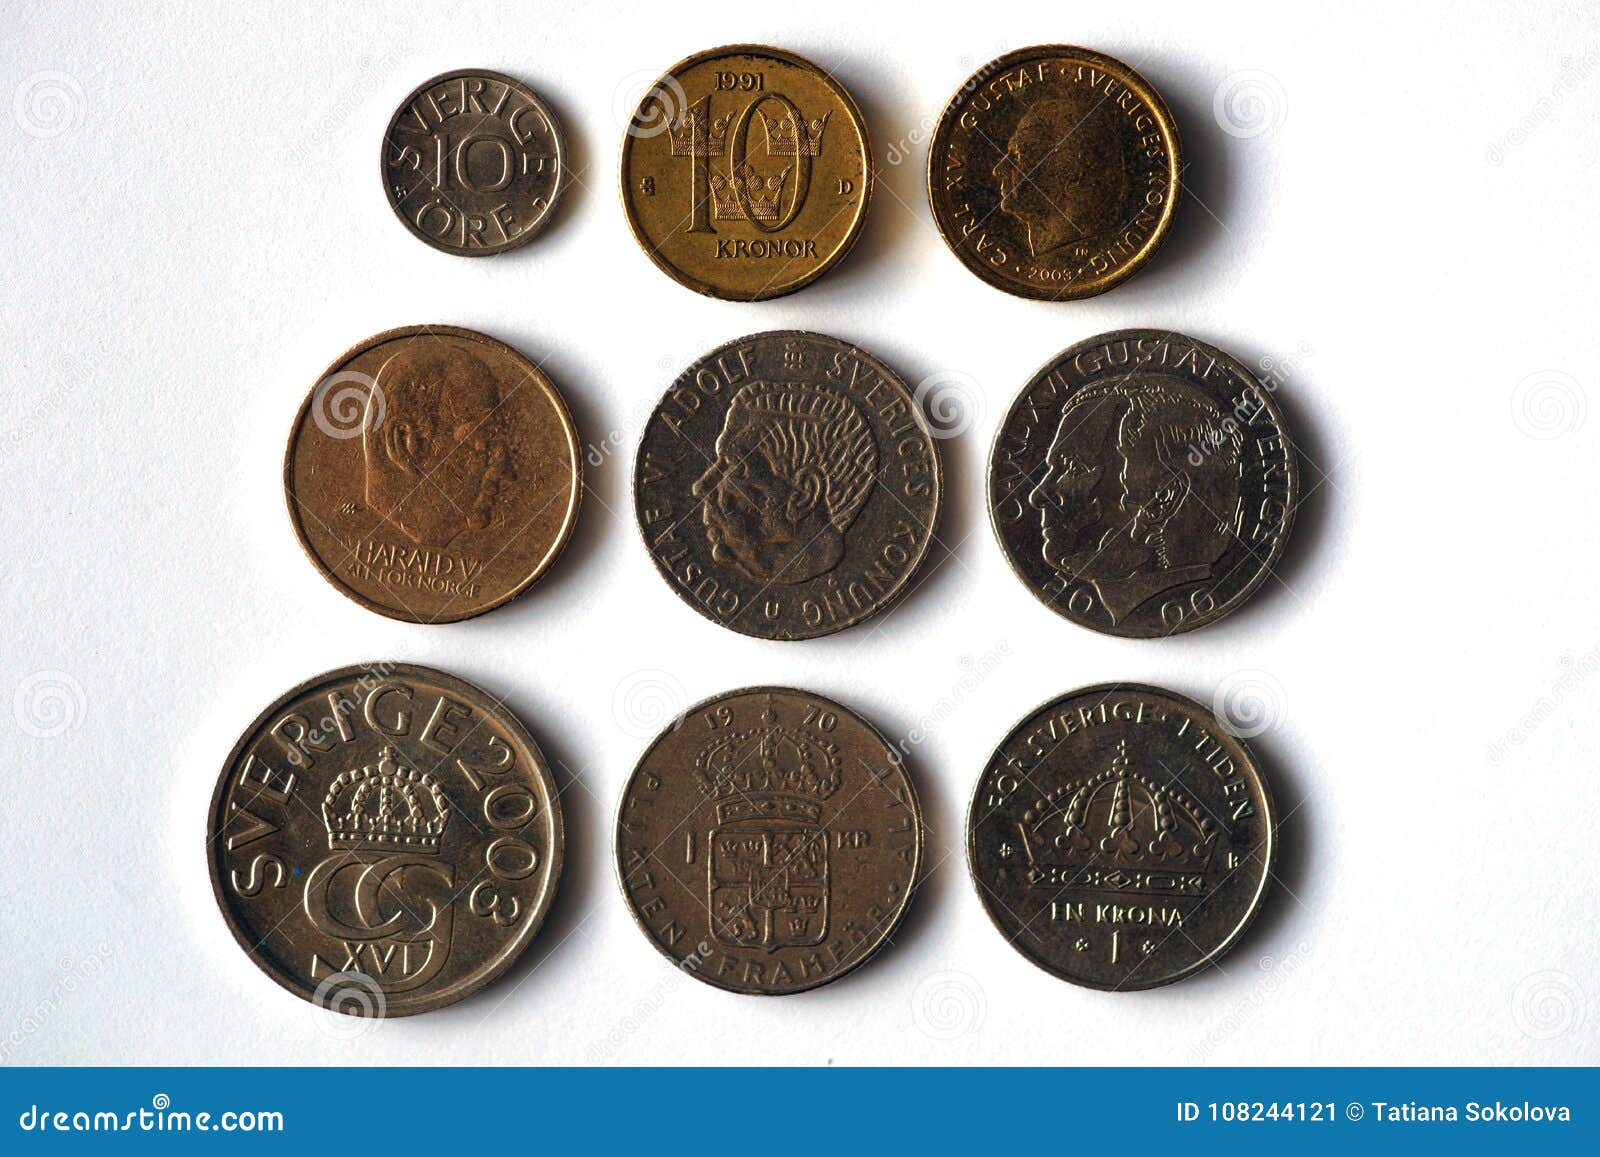 Common coin позиции шорт и лонг биткоин